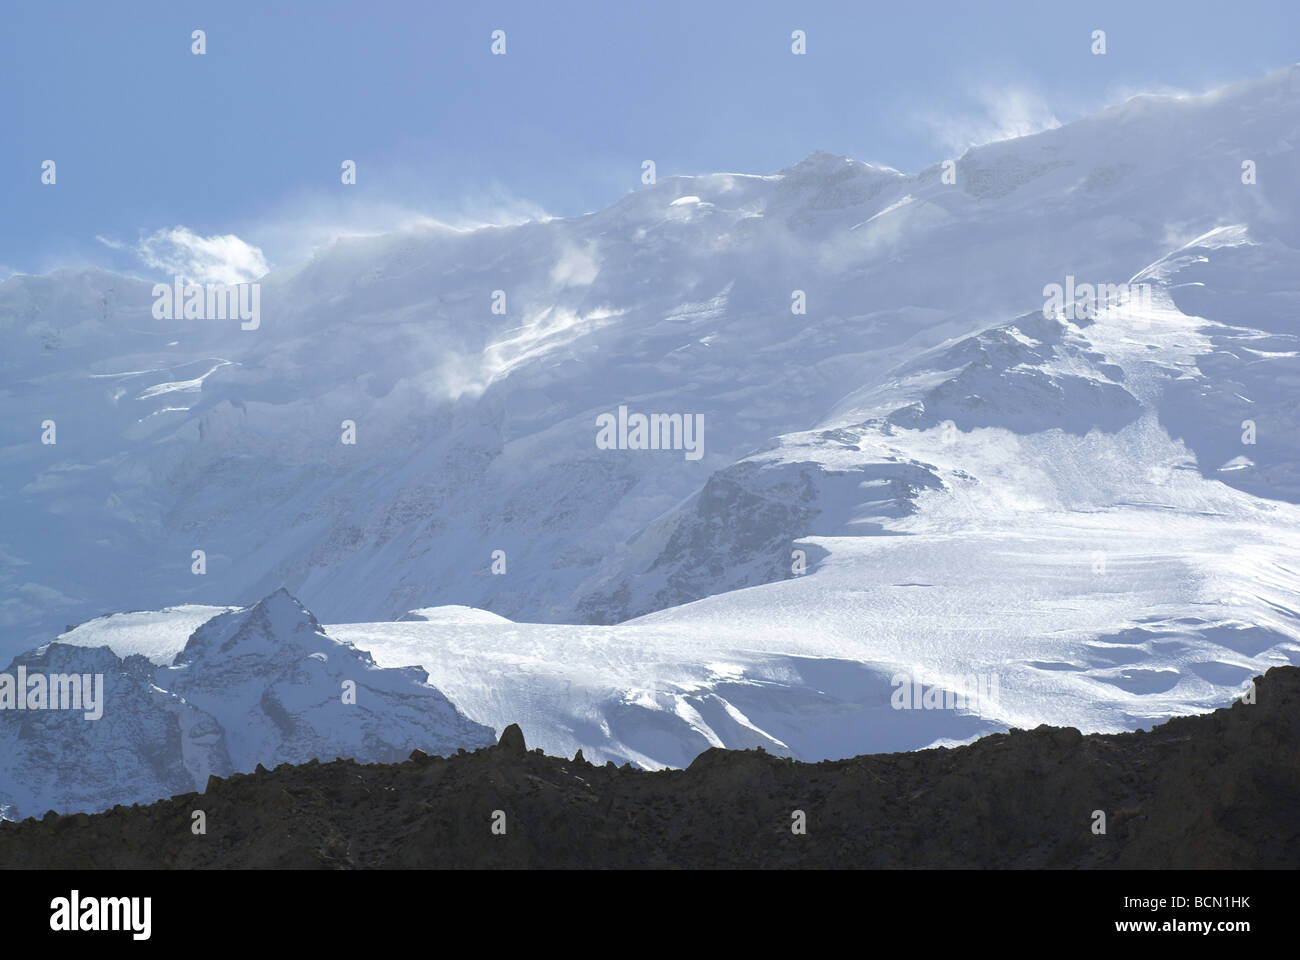 Maestosa montagna di neve, Tashkurgan tagiko contea autonoma, Kashgar Prefettura, Xinjiang Uyghur Regione autonoma, Cina Foto Stock